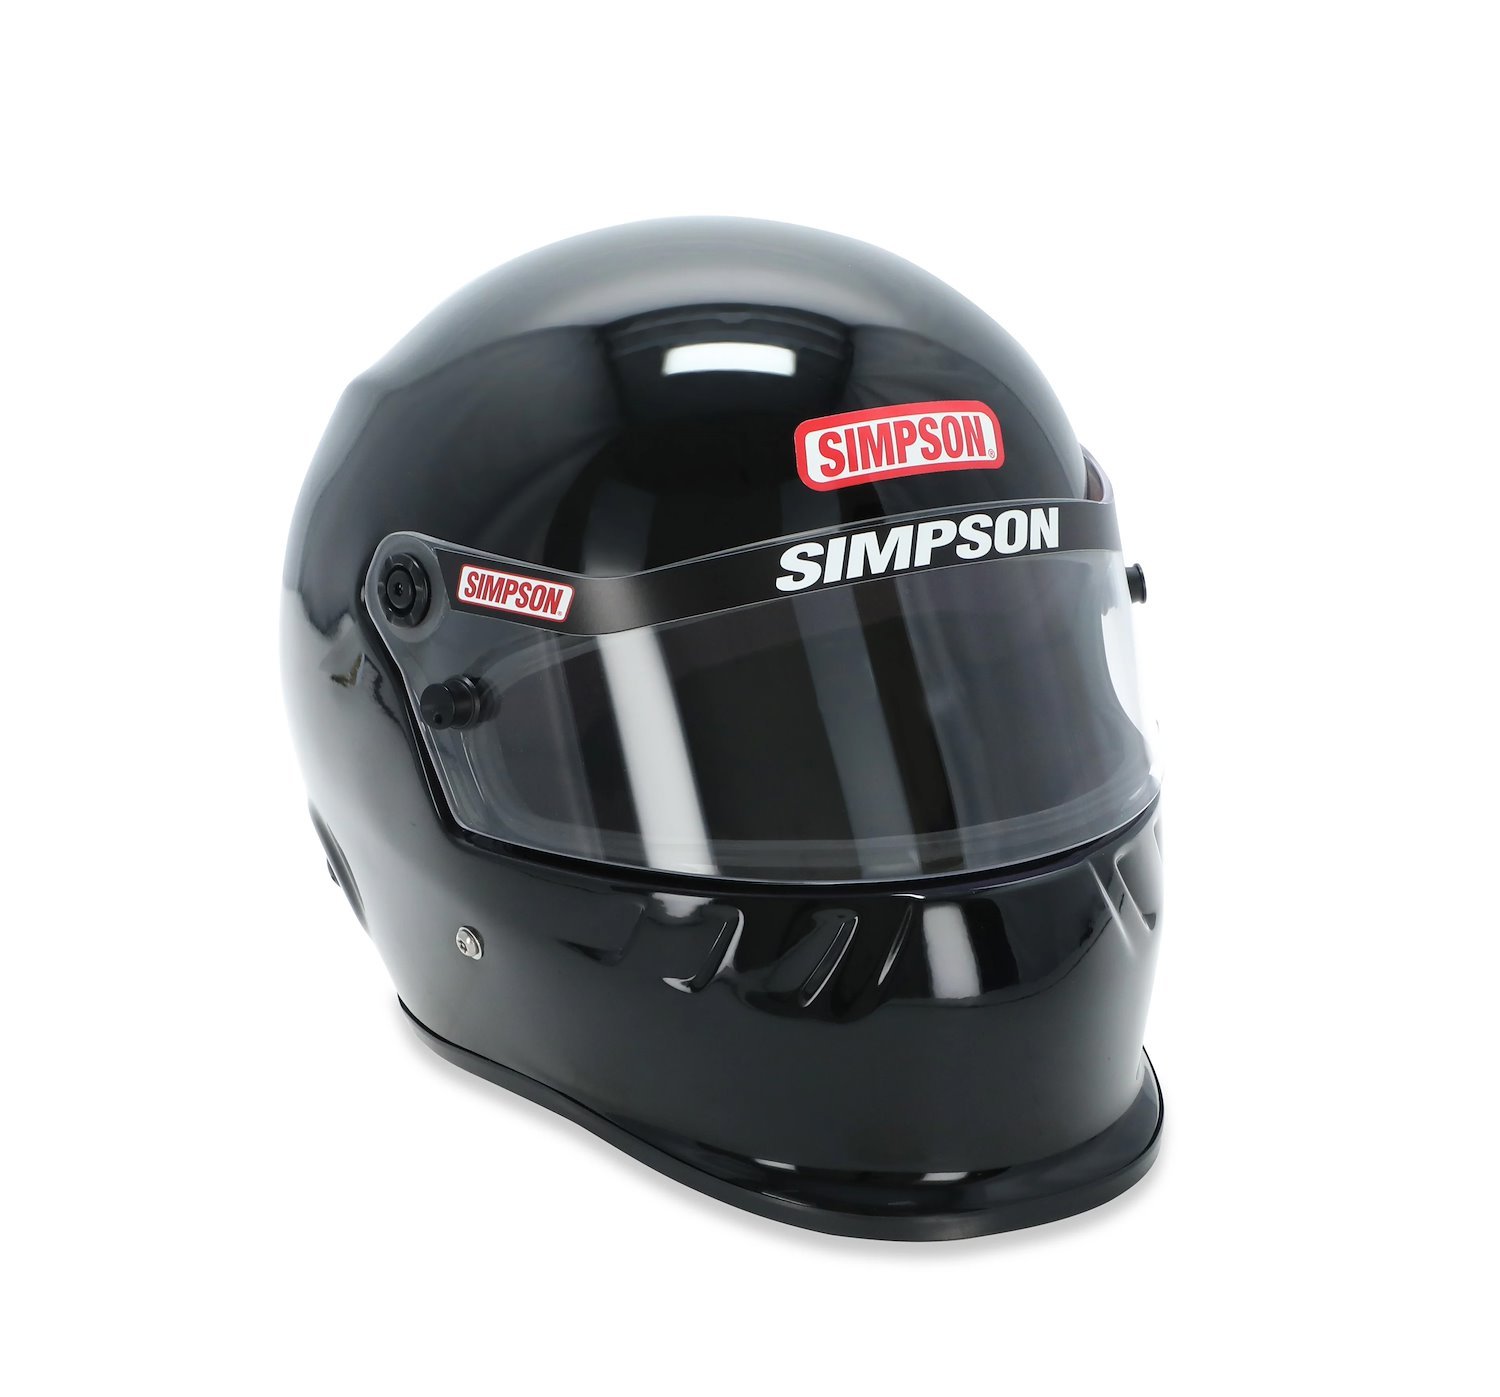 Simpson SD1 Lightweight Racing Helmets